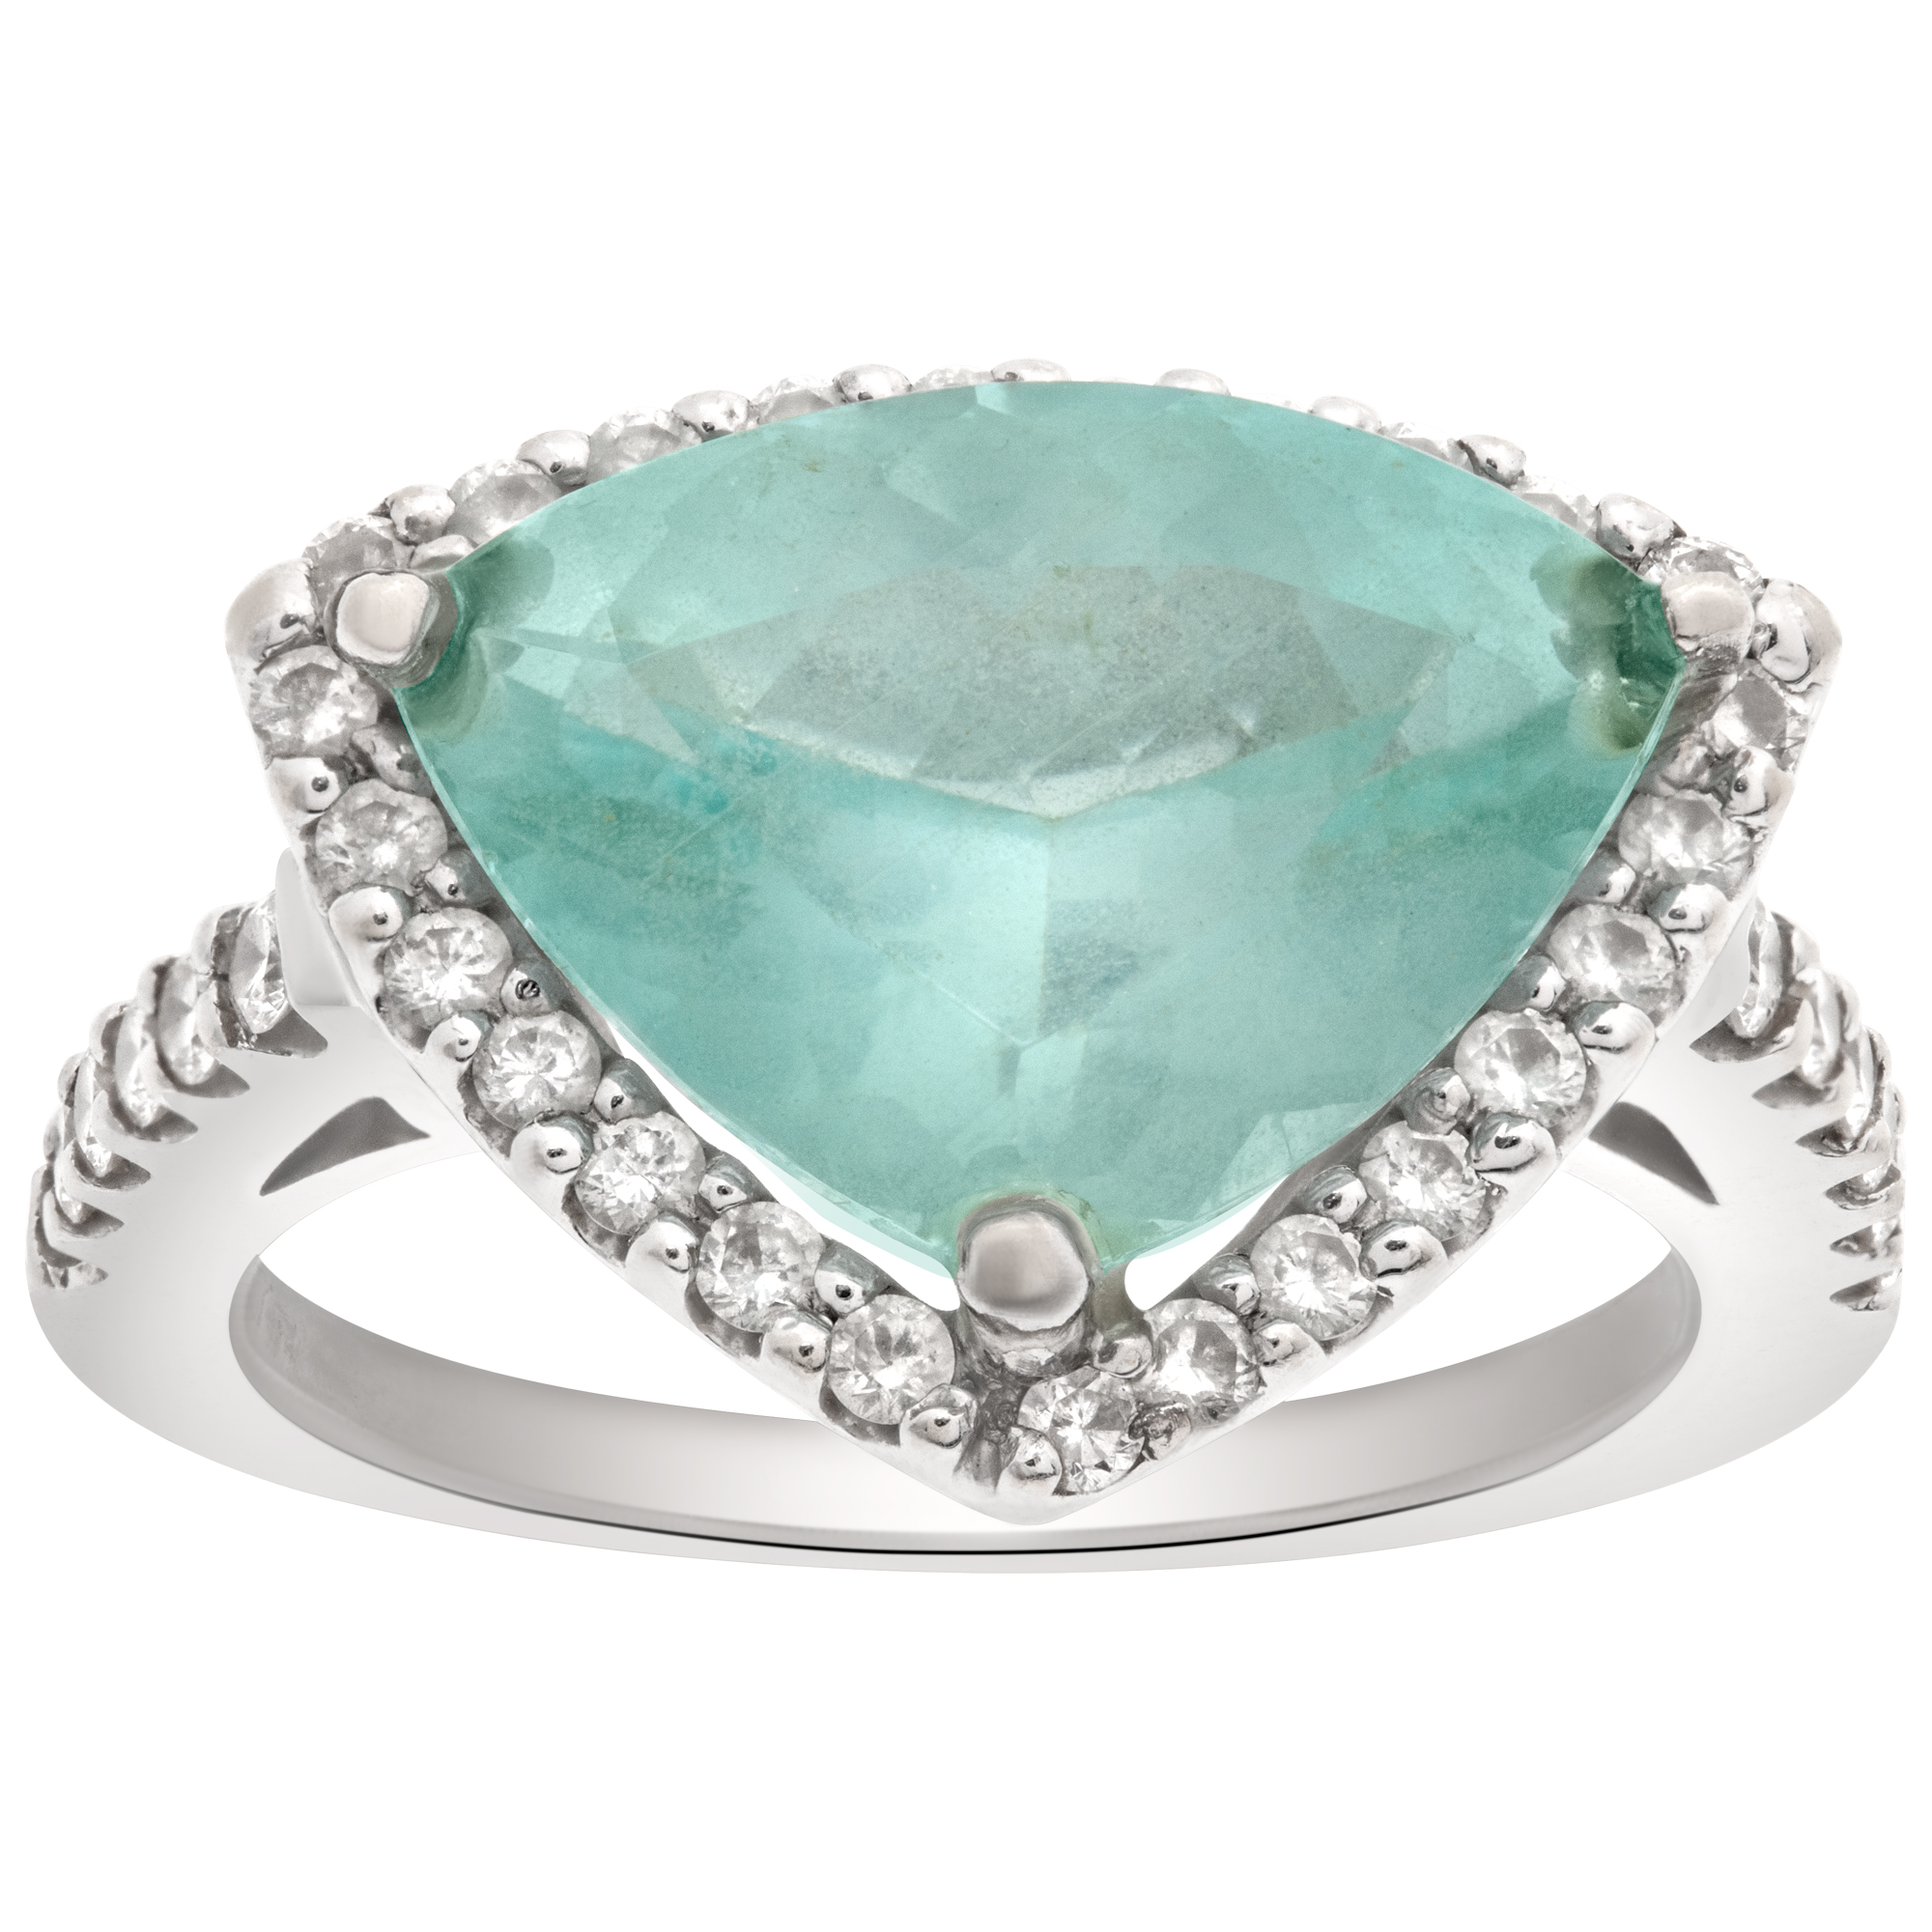 Triangular green aquamarine (over 3 carats) and diamonds ring set in 18k white gold. image 1